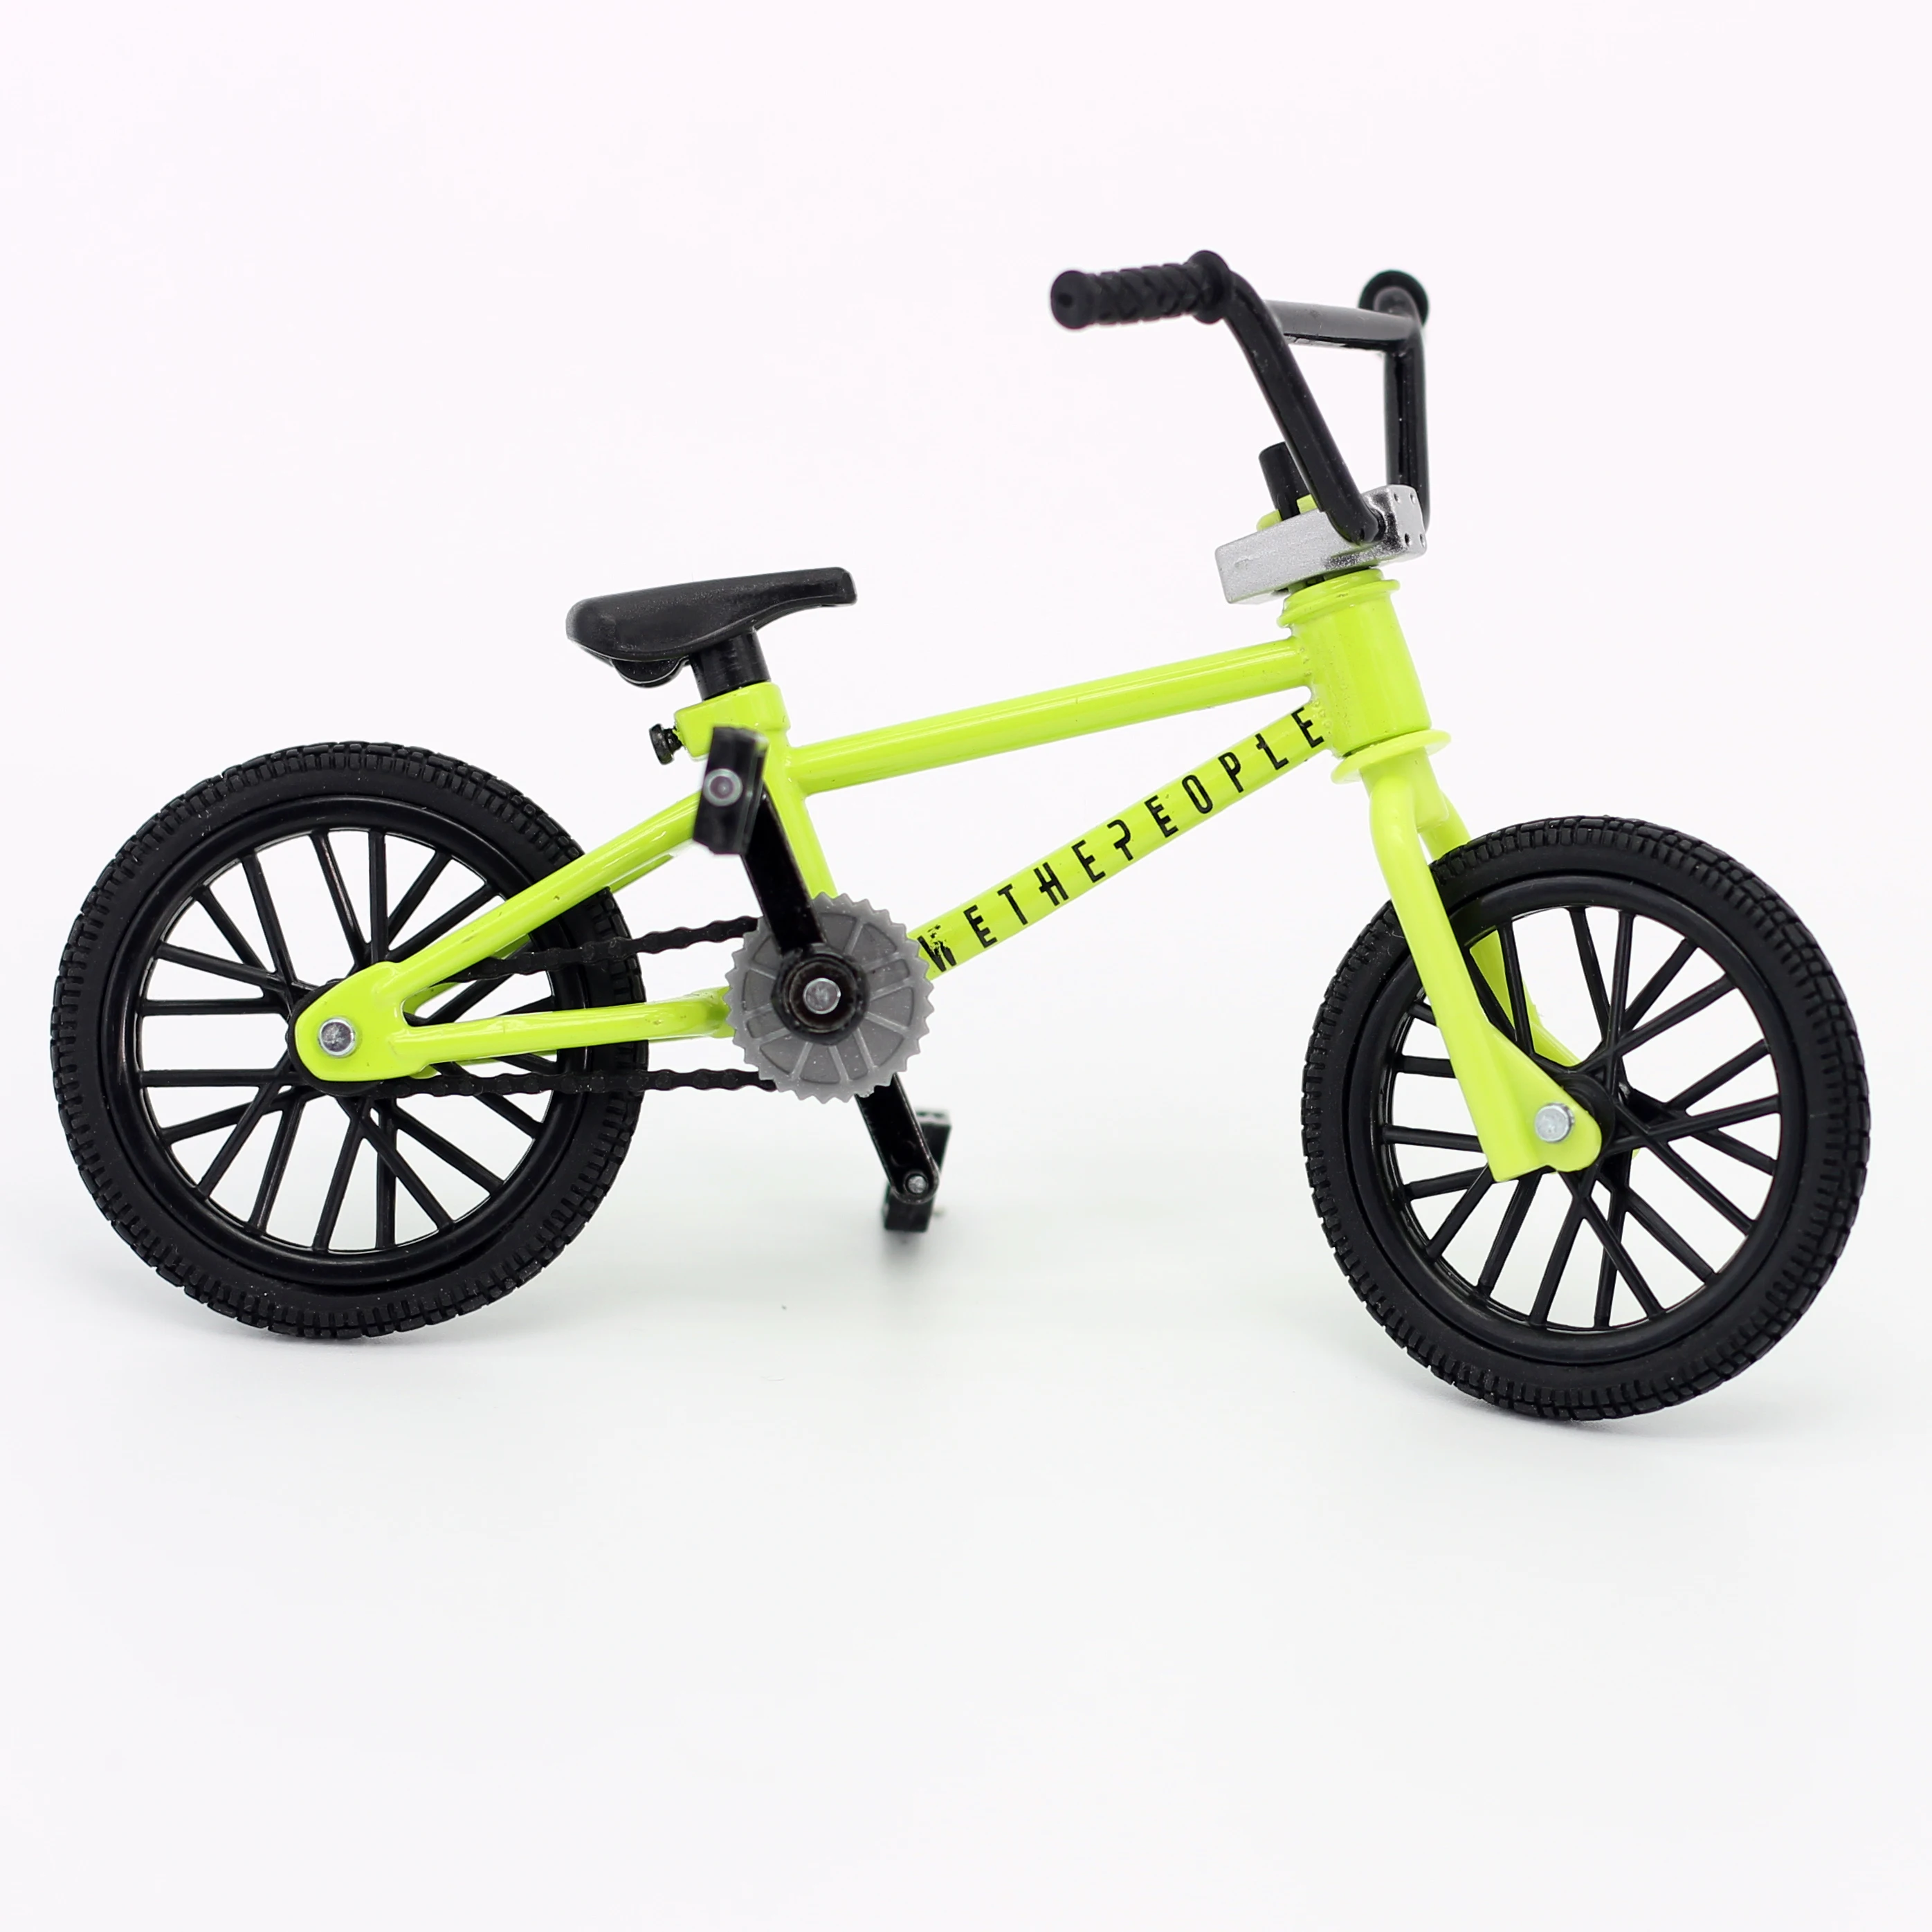 Retro Mini Finger BMX Bicycle Assembly Bike Model Toys Gadgets Kids Gifts 